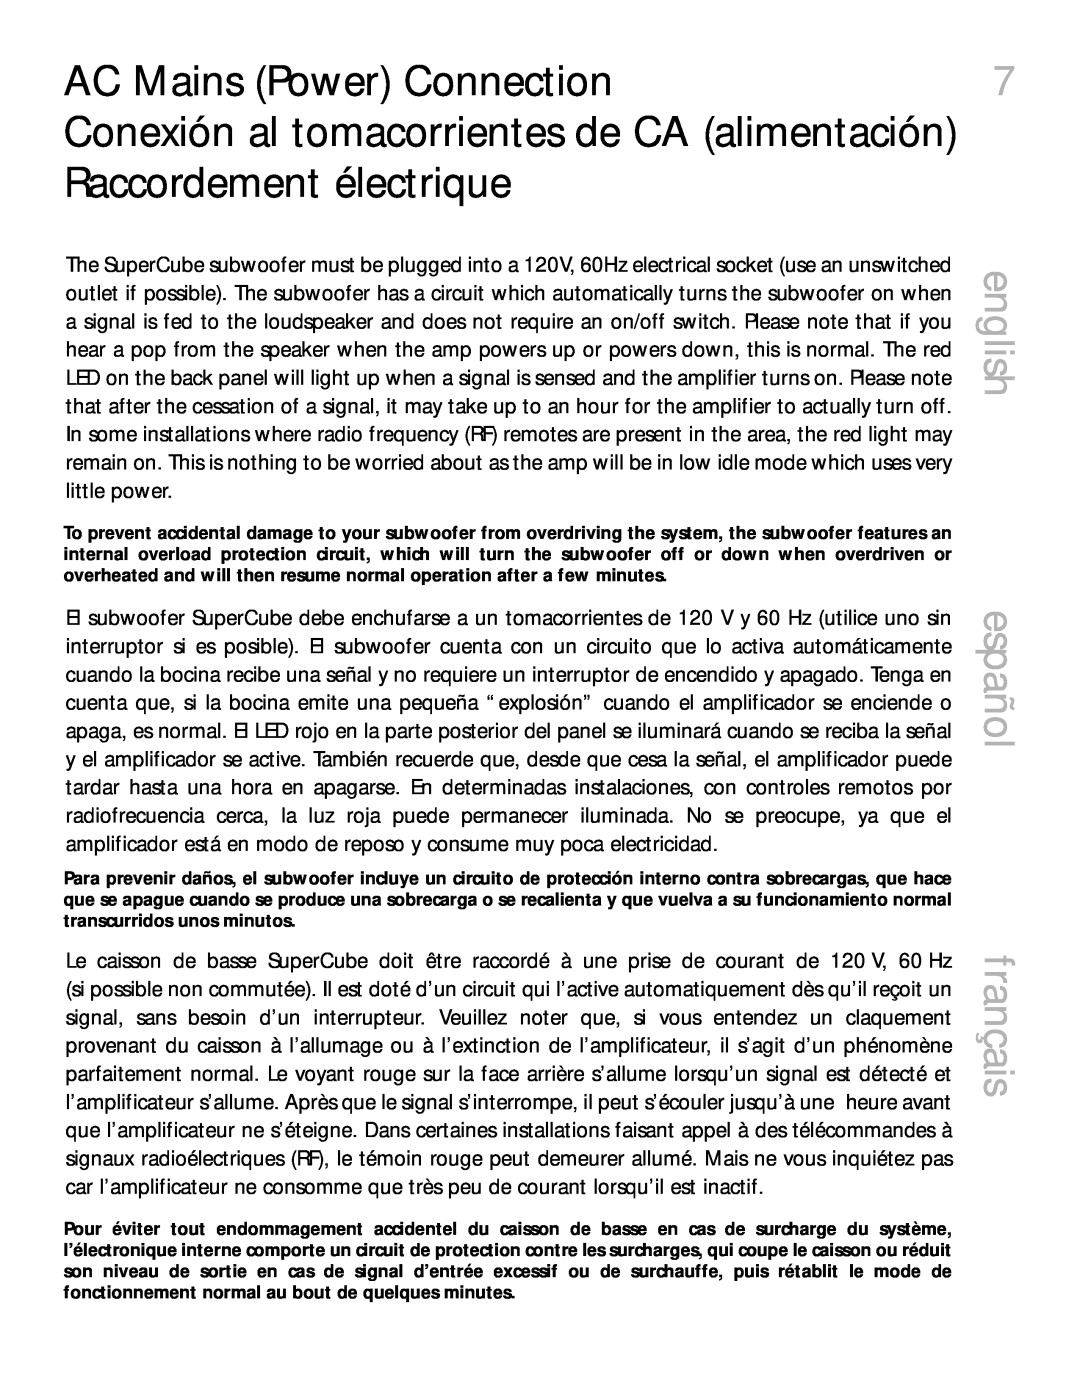 Definitive Technology 2000 owner manual AC Mains Power Connection, english, español, français 